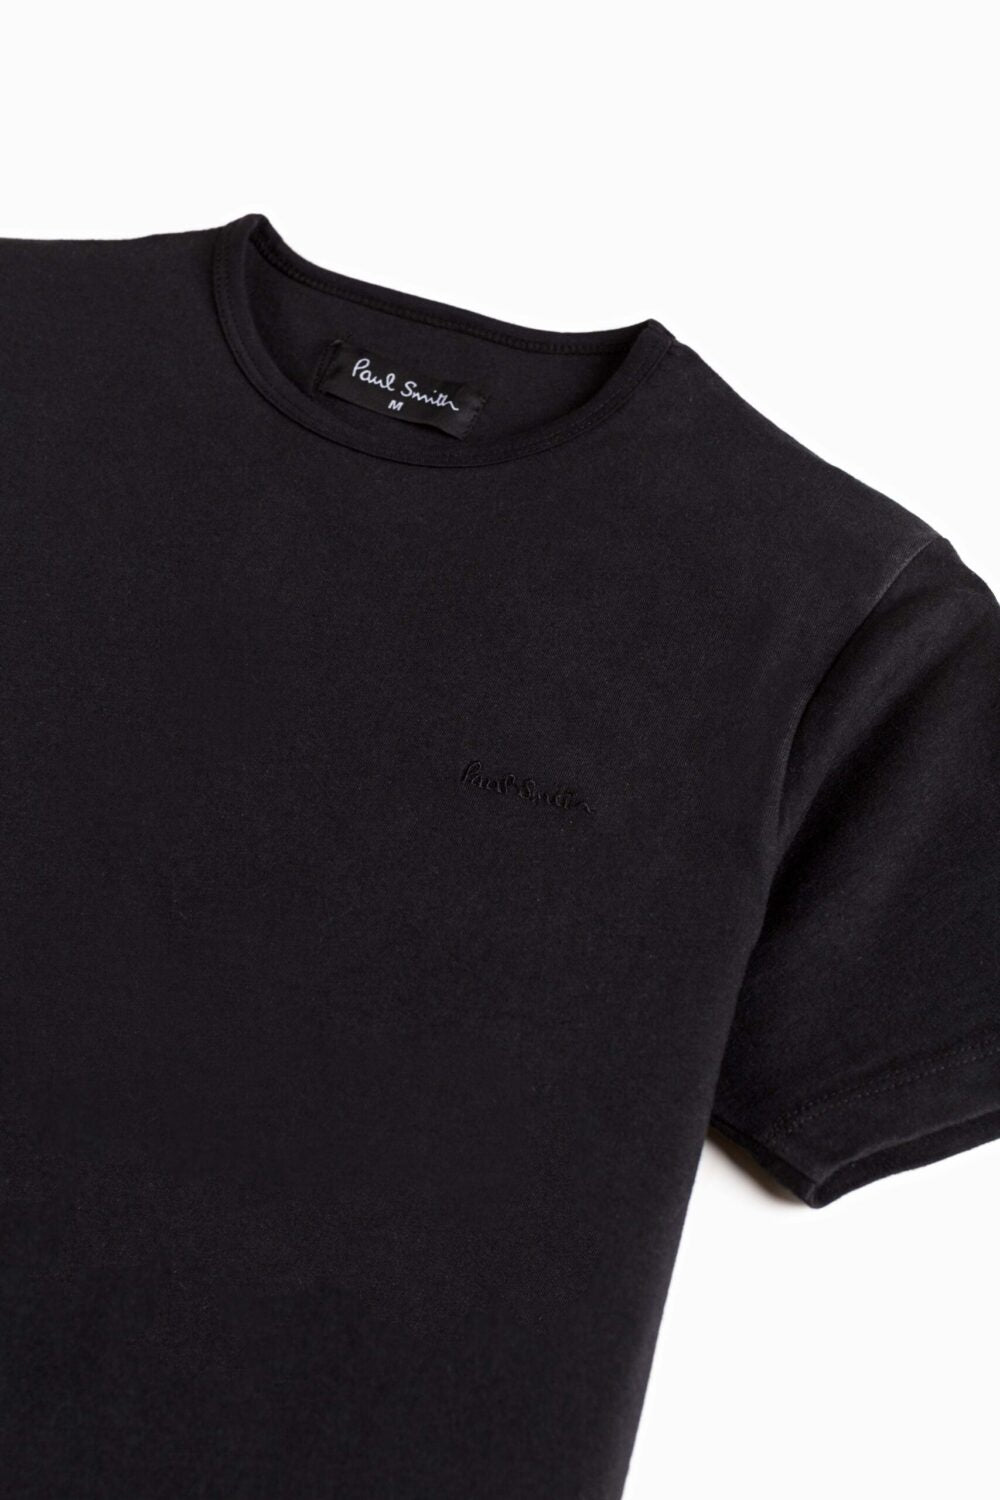 Paul Smith Original Cotton T Shirt – Black